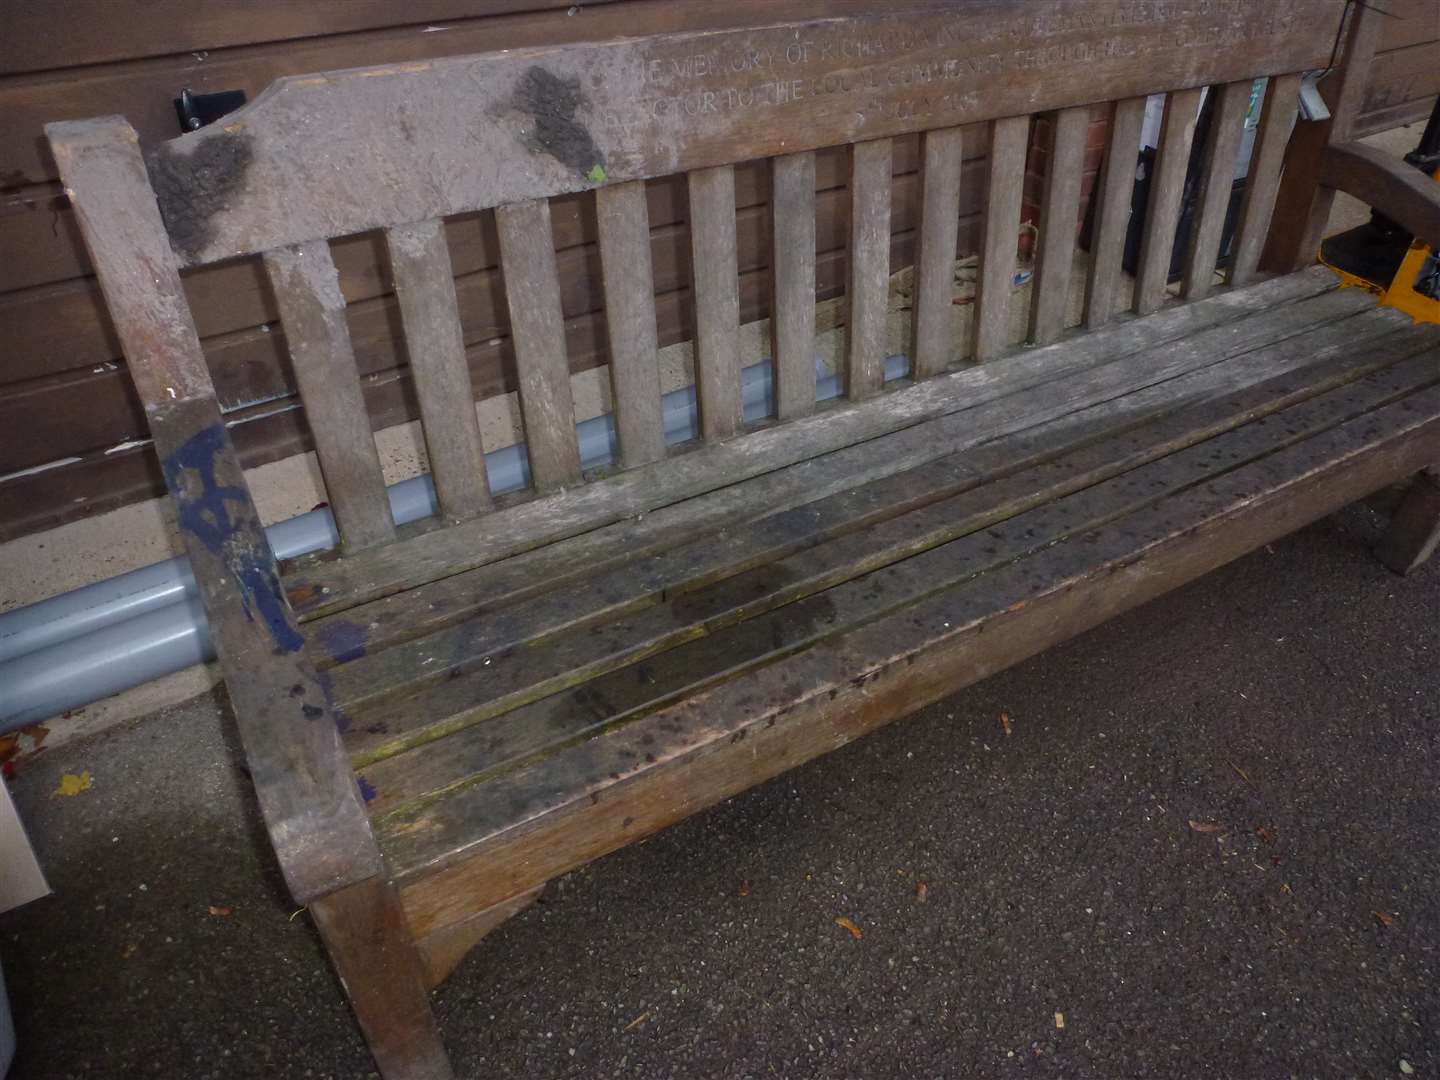 Memorial bench at the Riverside Centre was vandalised last week